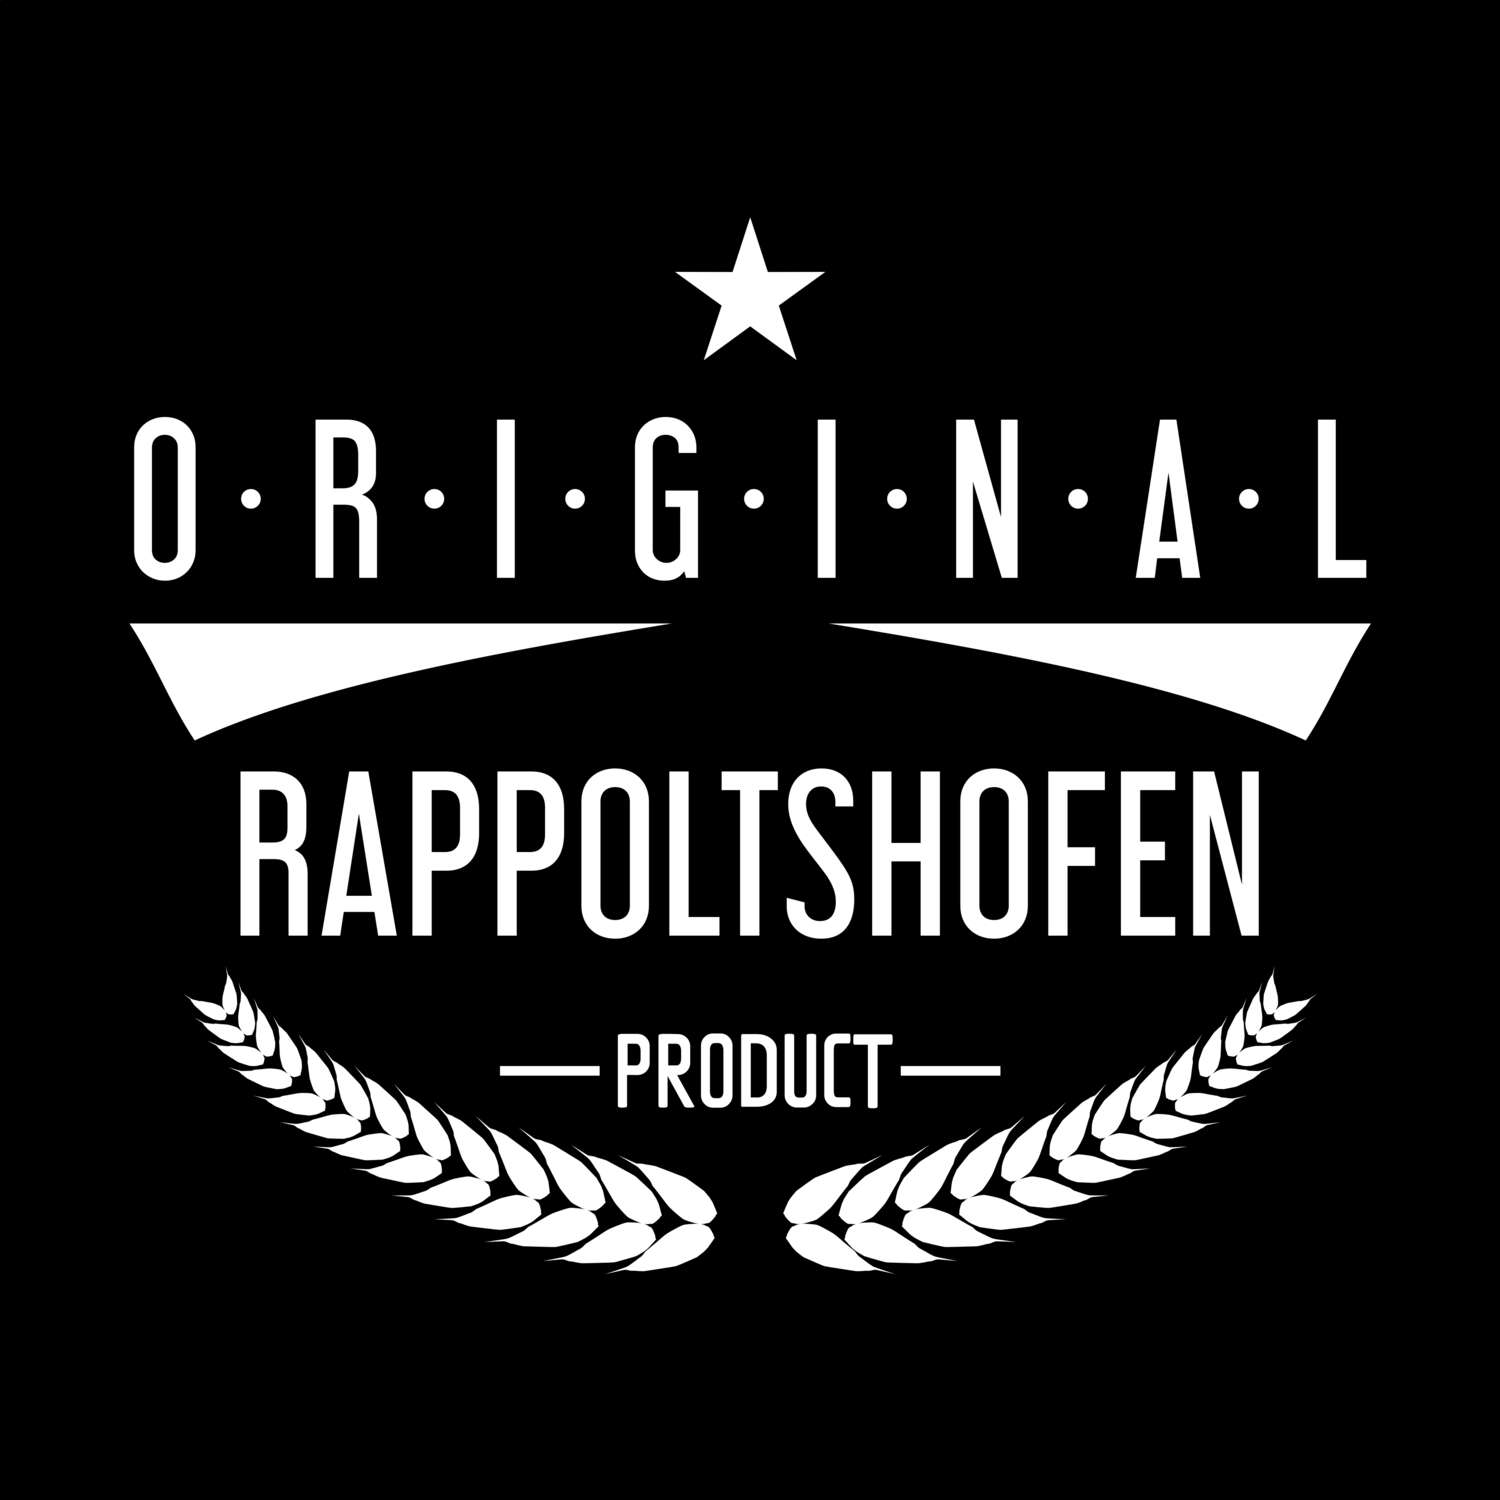 Rappoltshofen T-Shirt »Original Product«